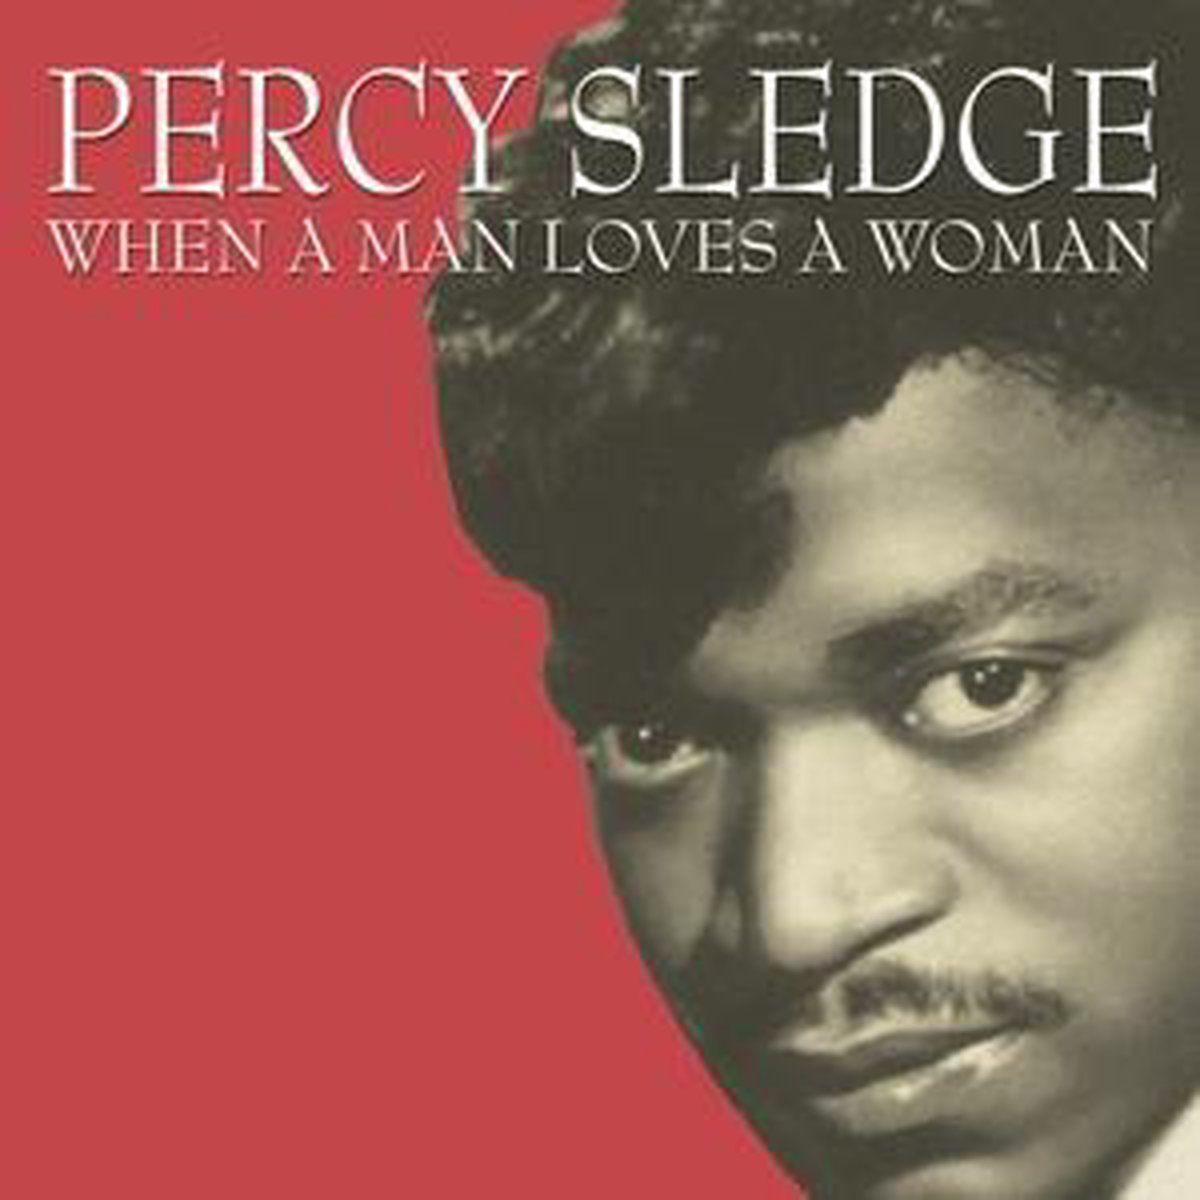 Sledge, Percy - When a Man Loves a Woman